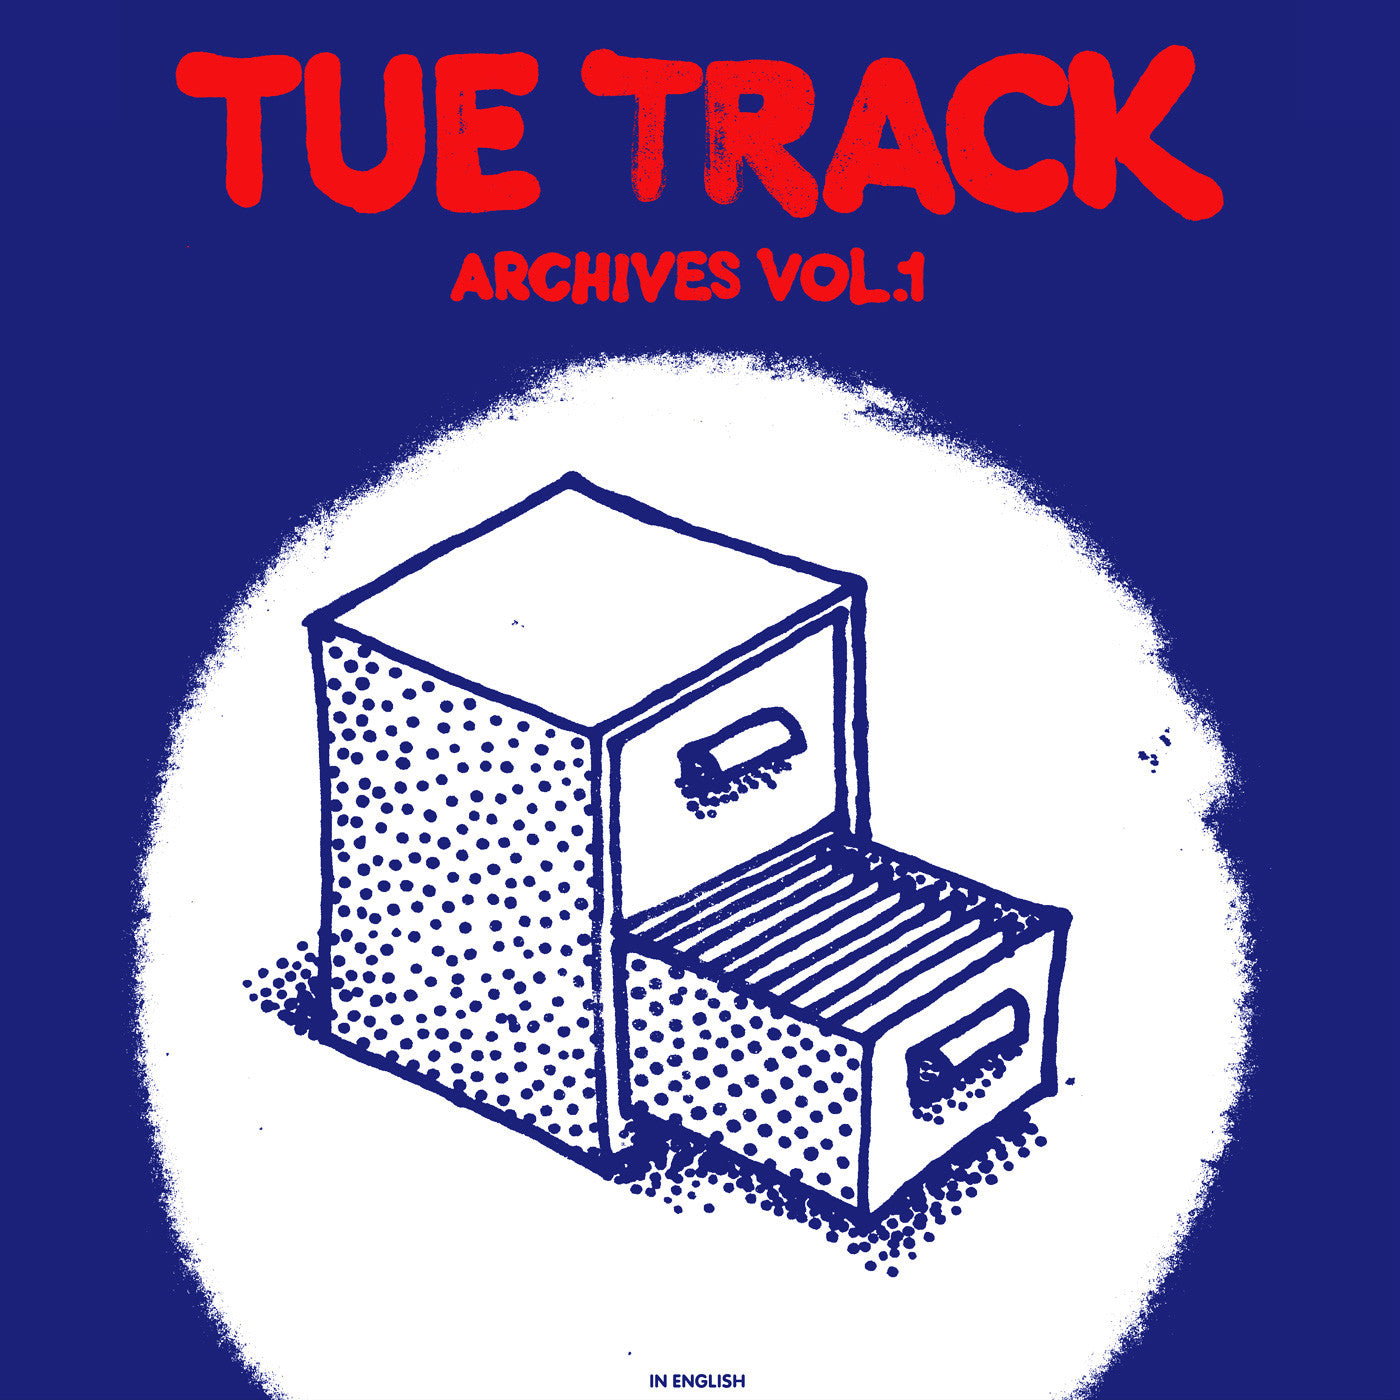 Track, Tue - Archives Vol. 1